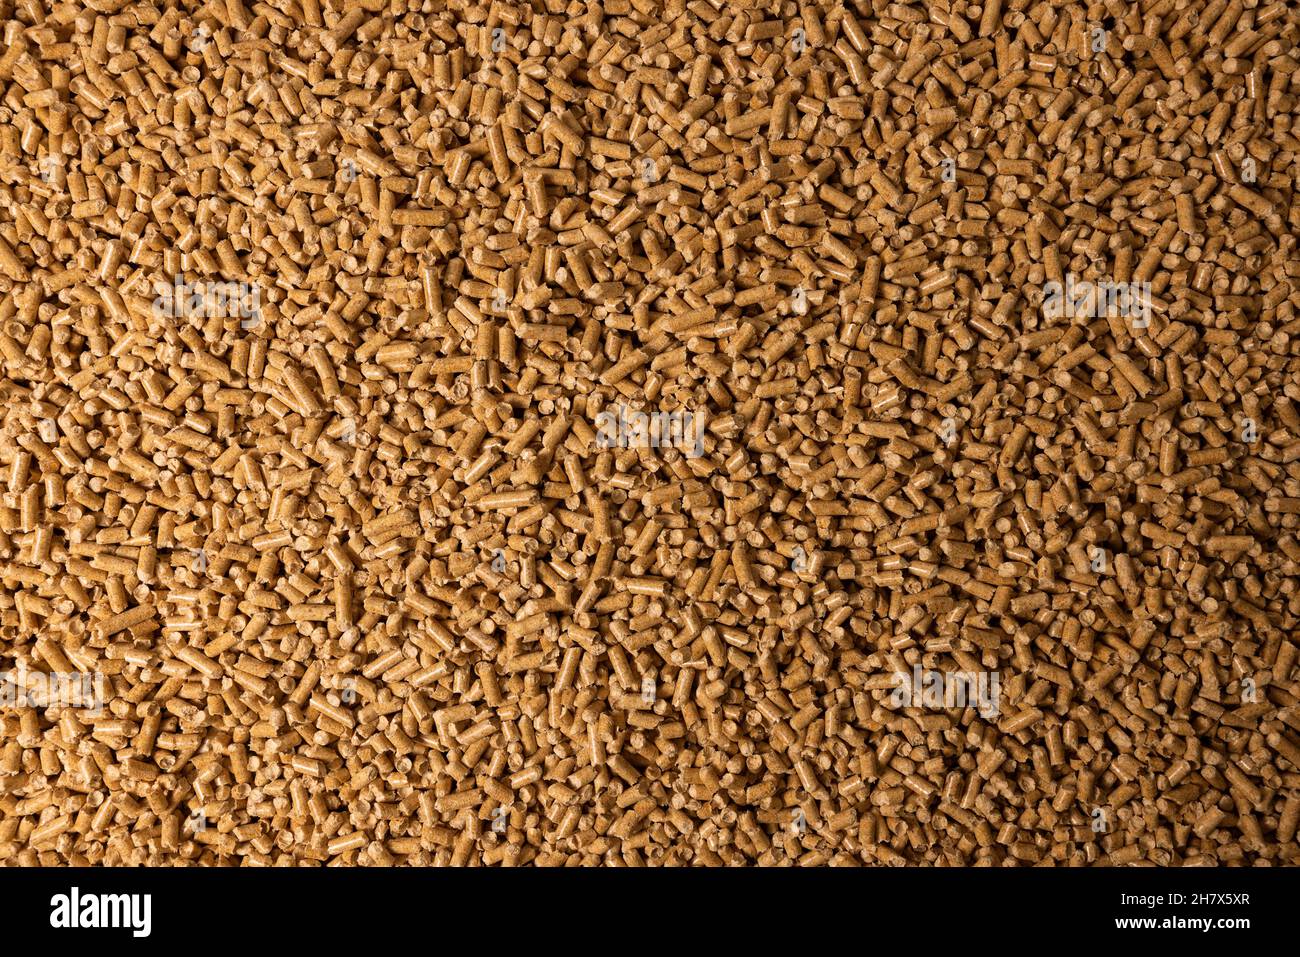 wood pellets background. biomass biofuel Stock Photo